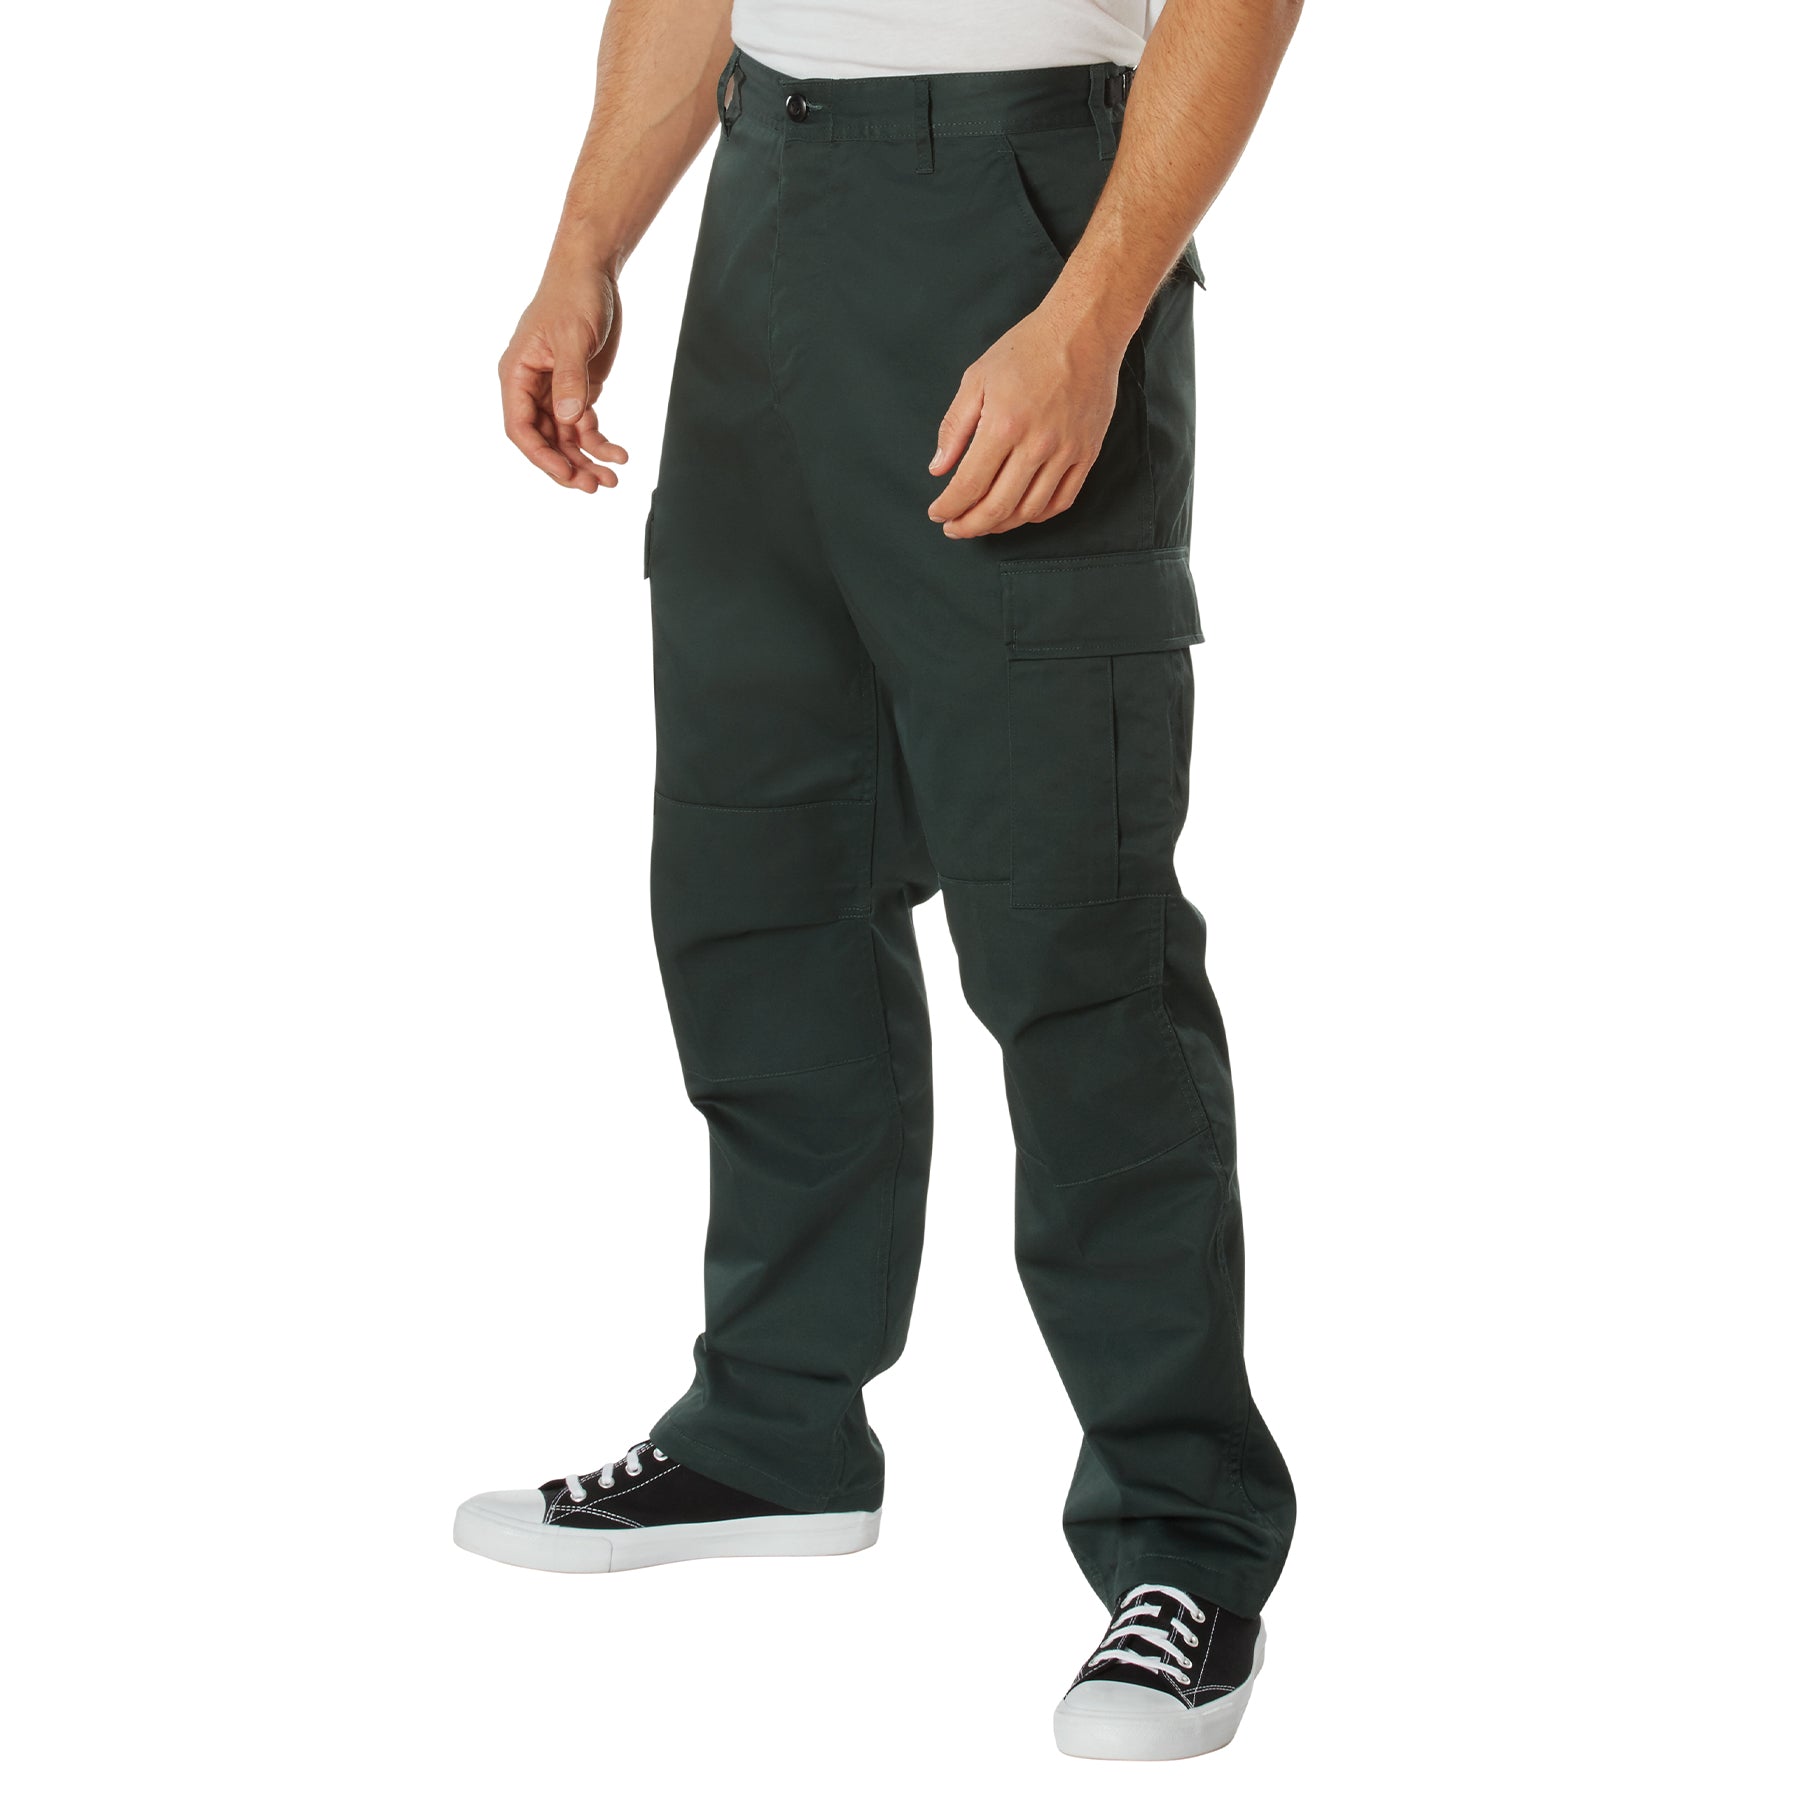 Poly/Cotton Tactical BDU Pants